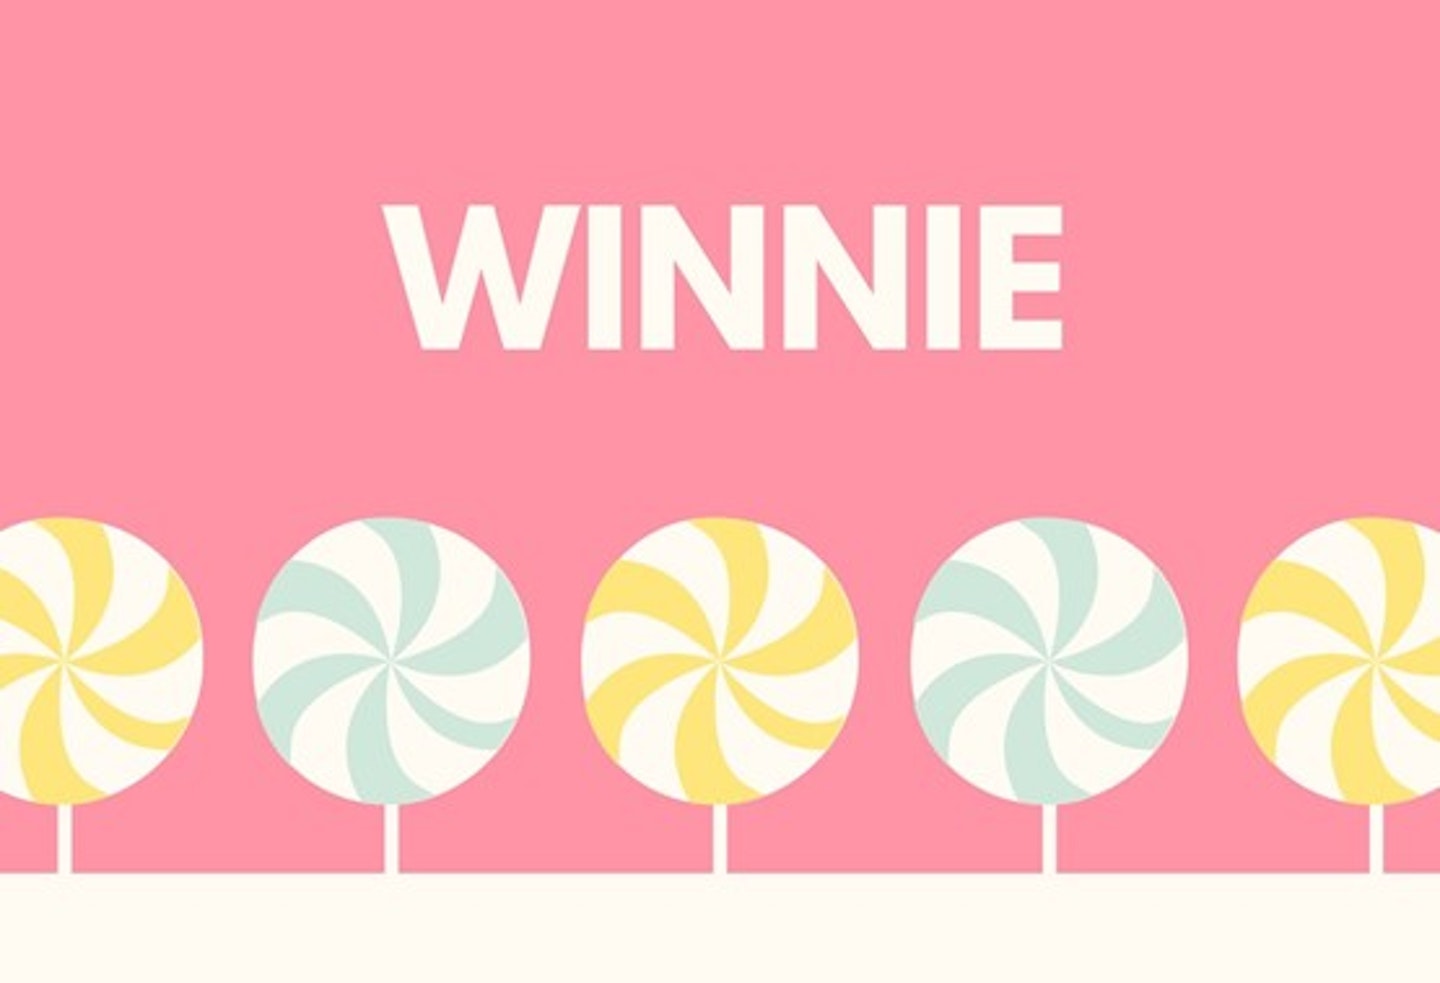 33) Winnie